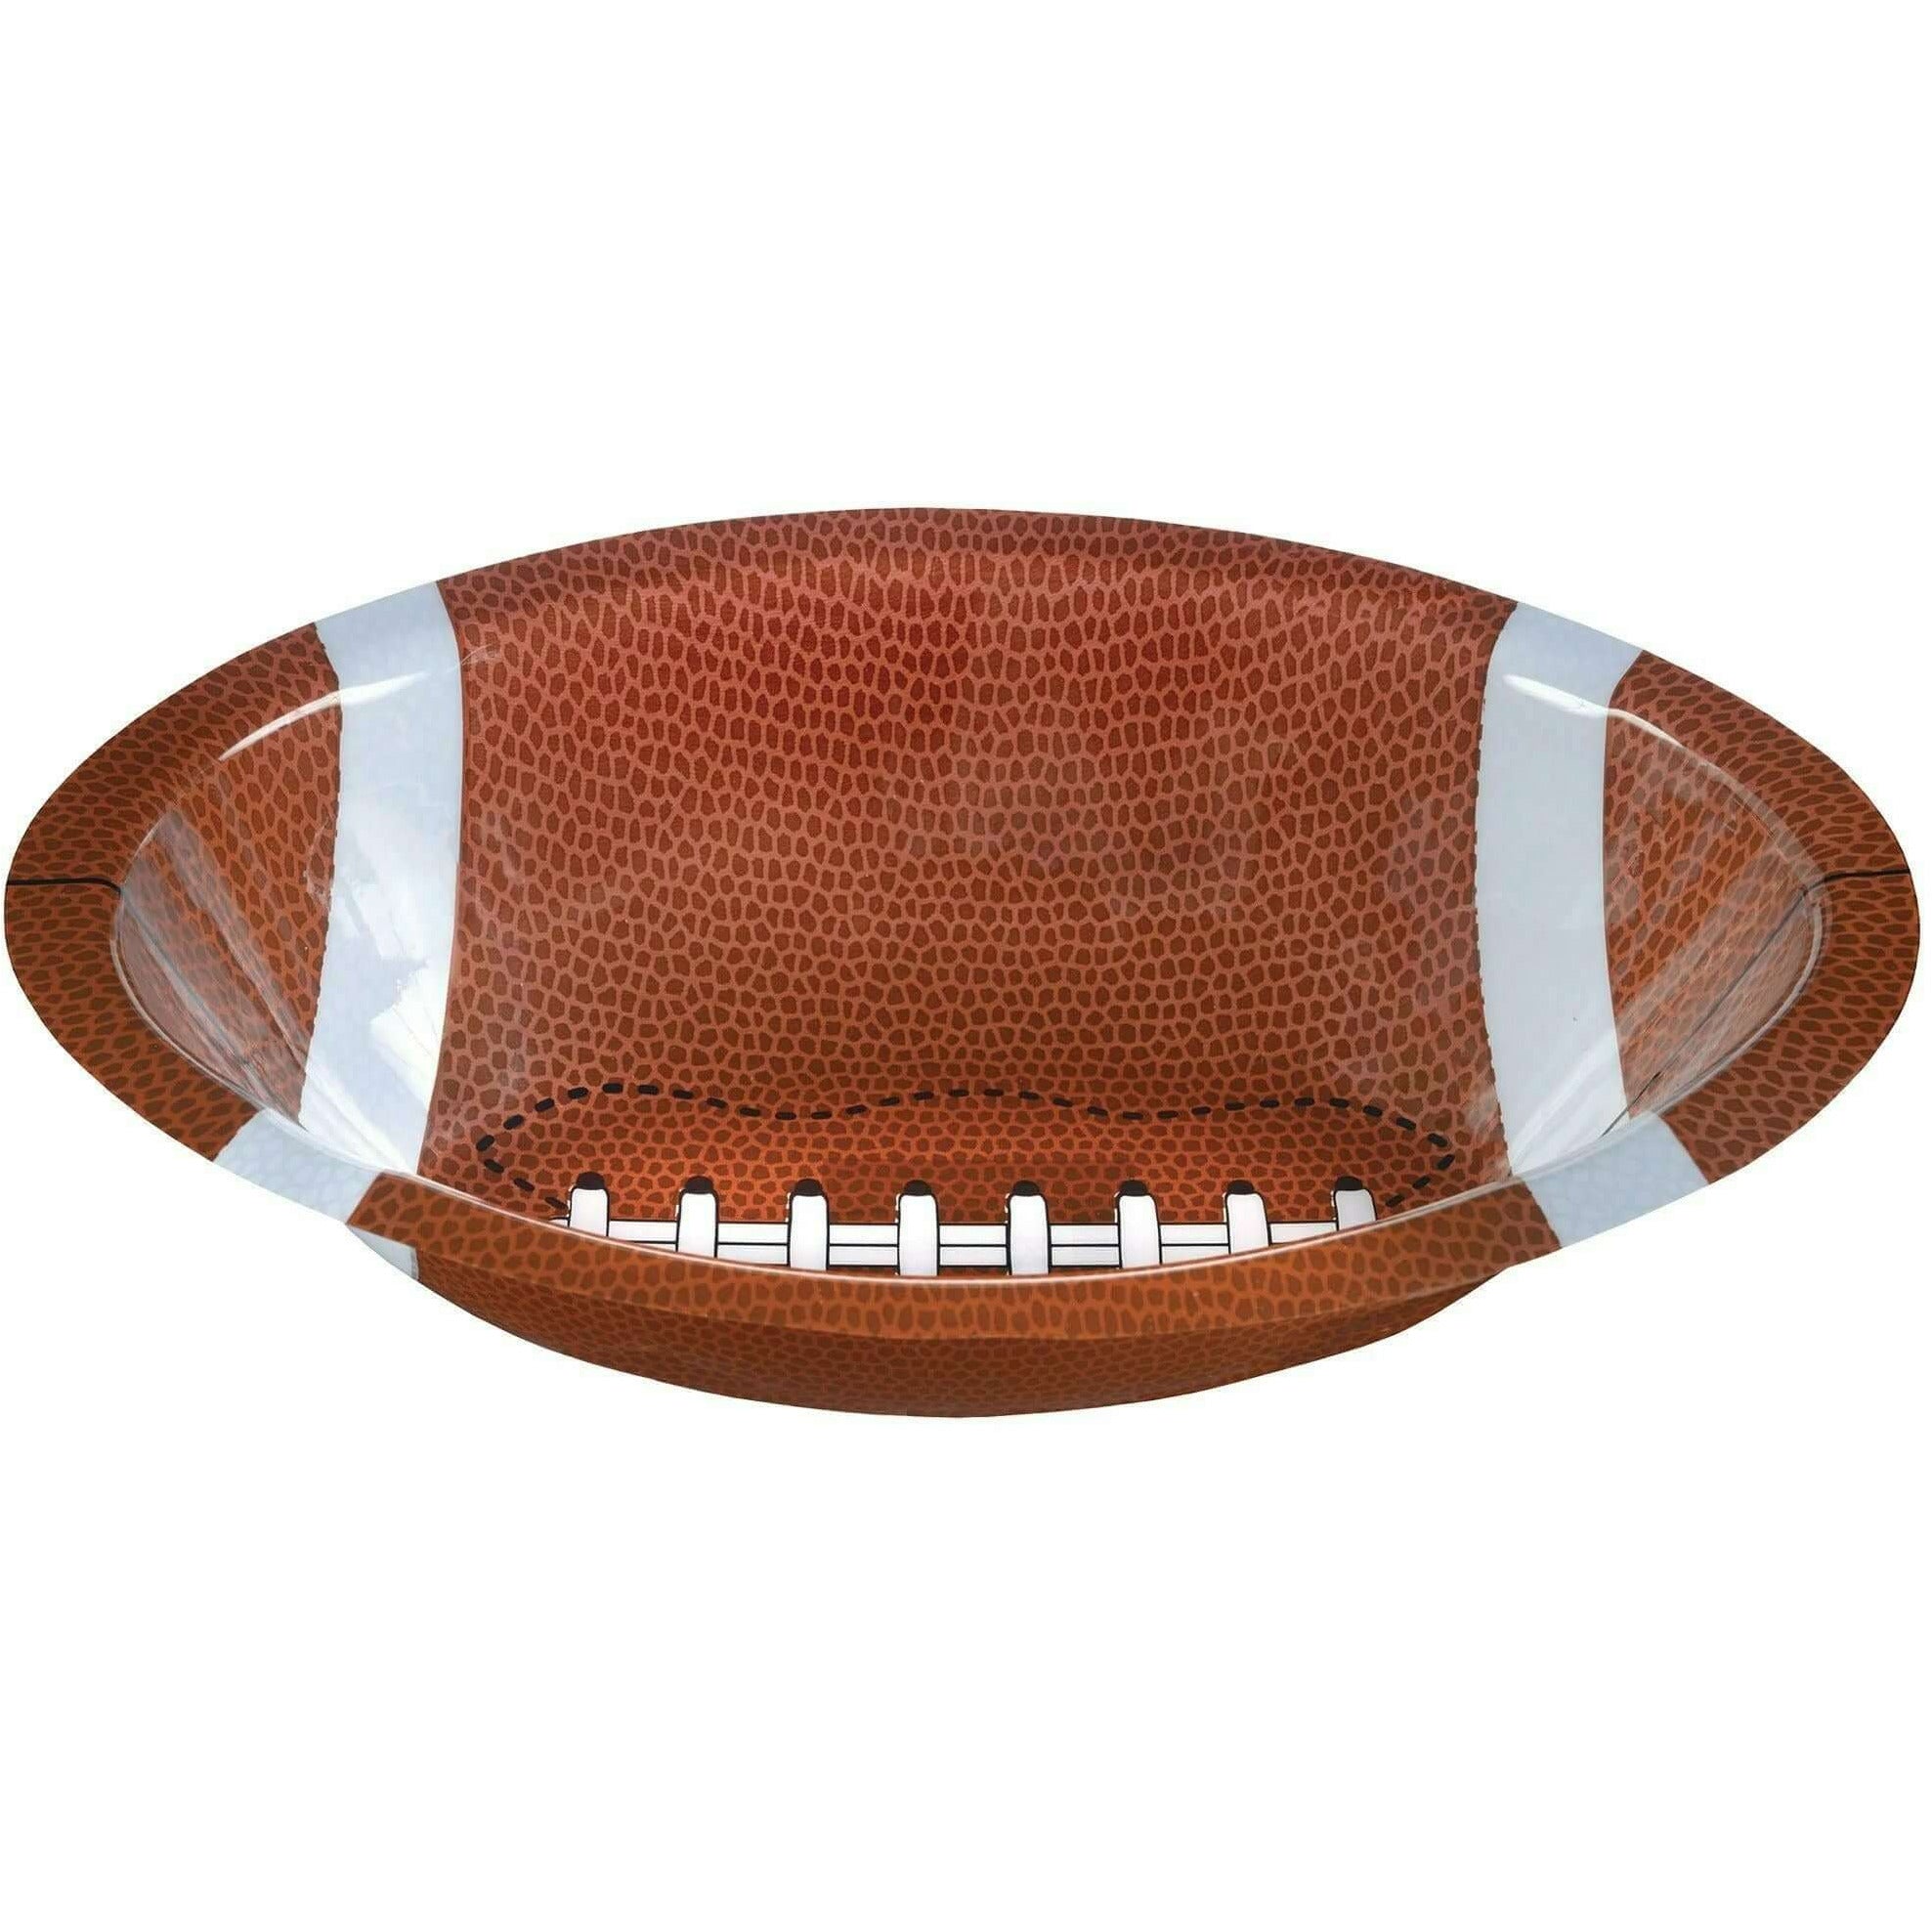 Amscan THEME: SPORTS Football Bowl